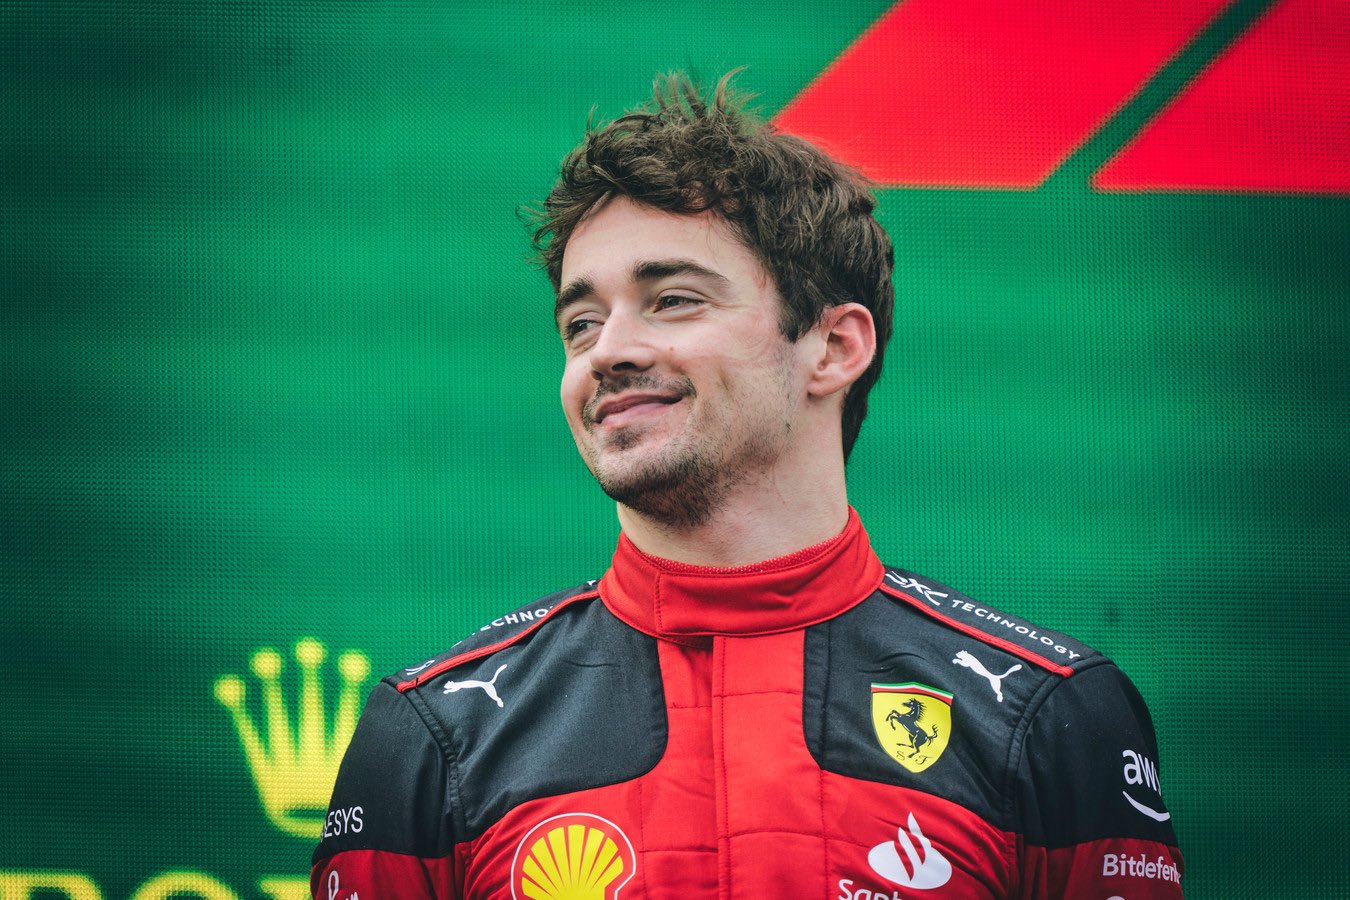 Austrian Grand Prix: Charles Leclerc on podium, Max Verstappen's roll ...